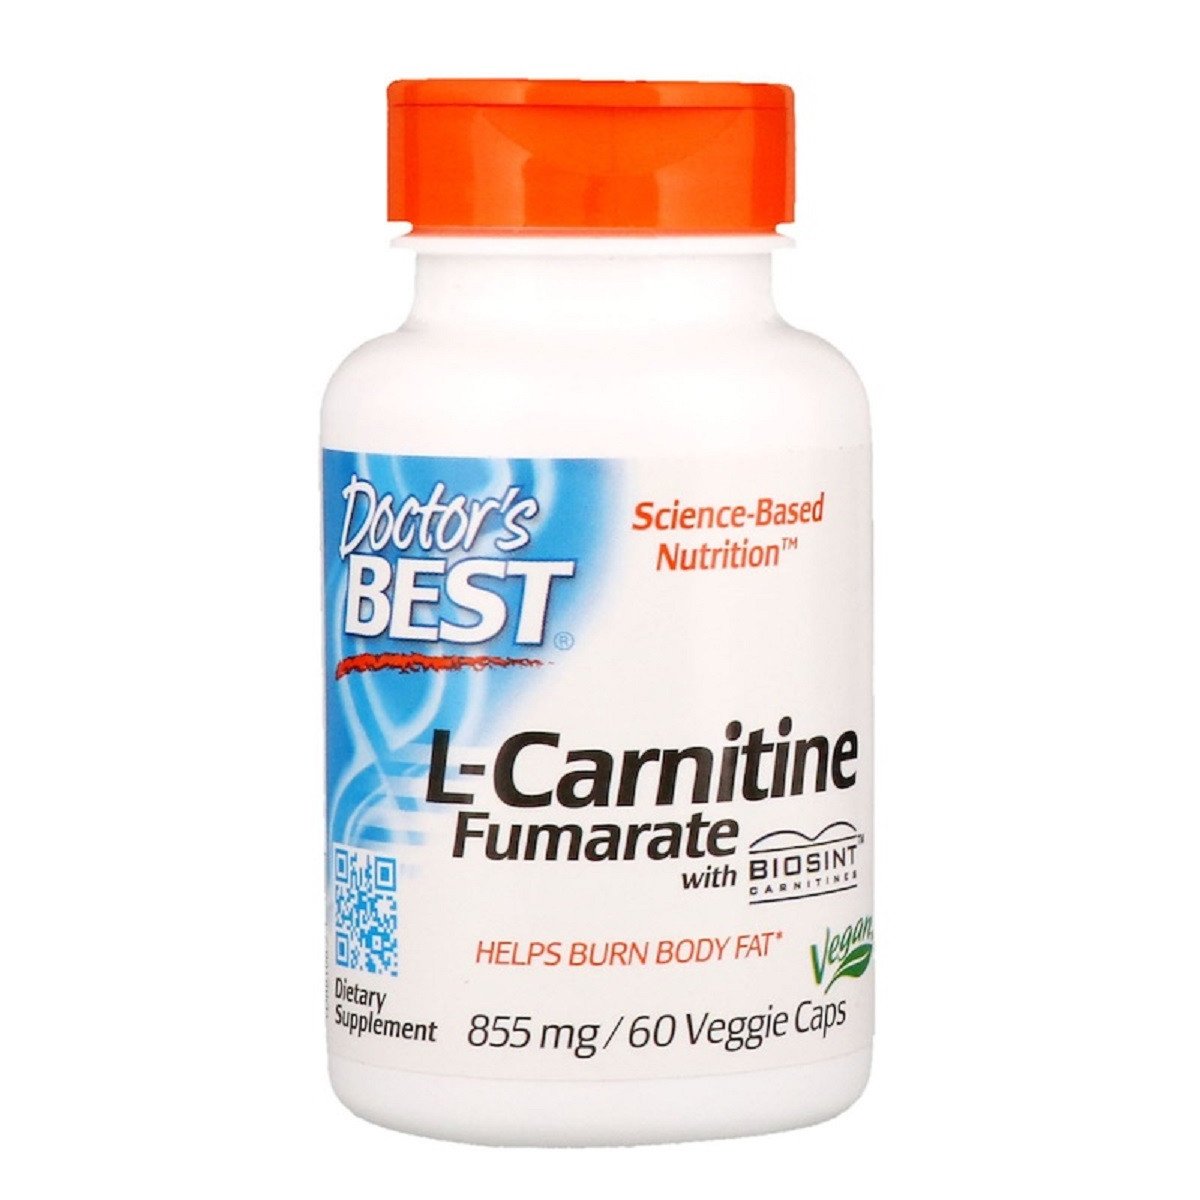 Л-карнитин Фумарат, L-Carnitine Fumarate, Doctor's Best, 855 мг, 60 капсул доктор бест,  ml, Doctor's BEST. L-carnitine. Weight Loss General Health Detoxification Stress resistance Lowering cholesterol Antioxidant properties 